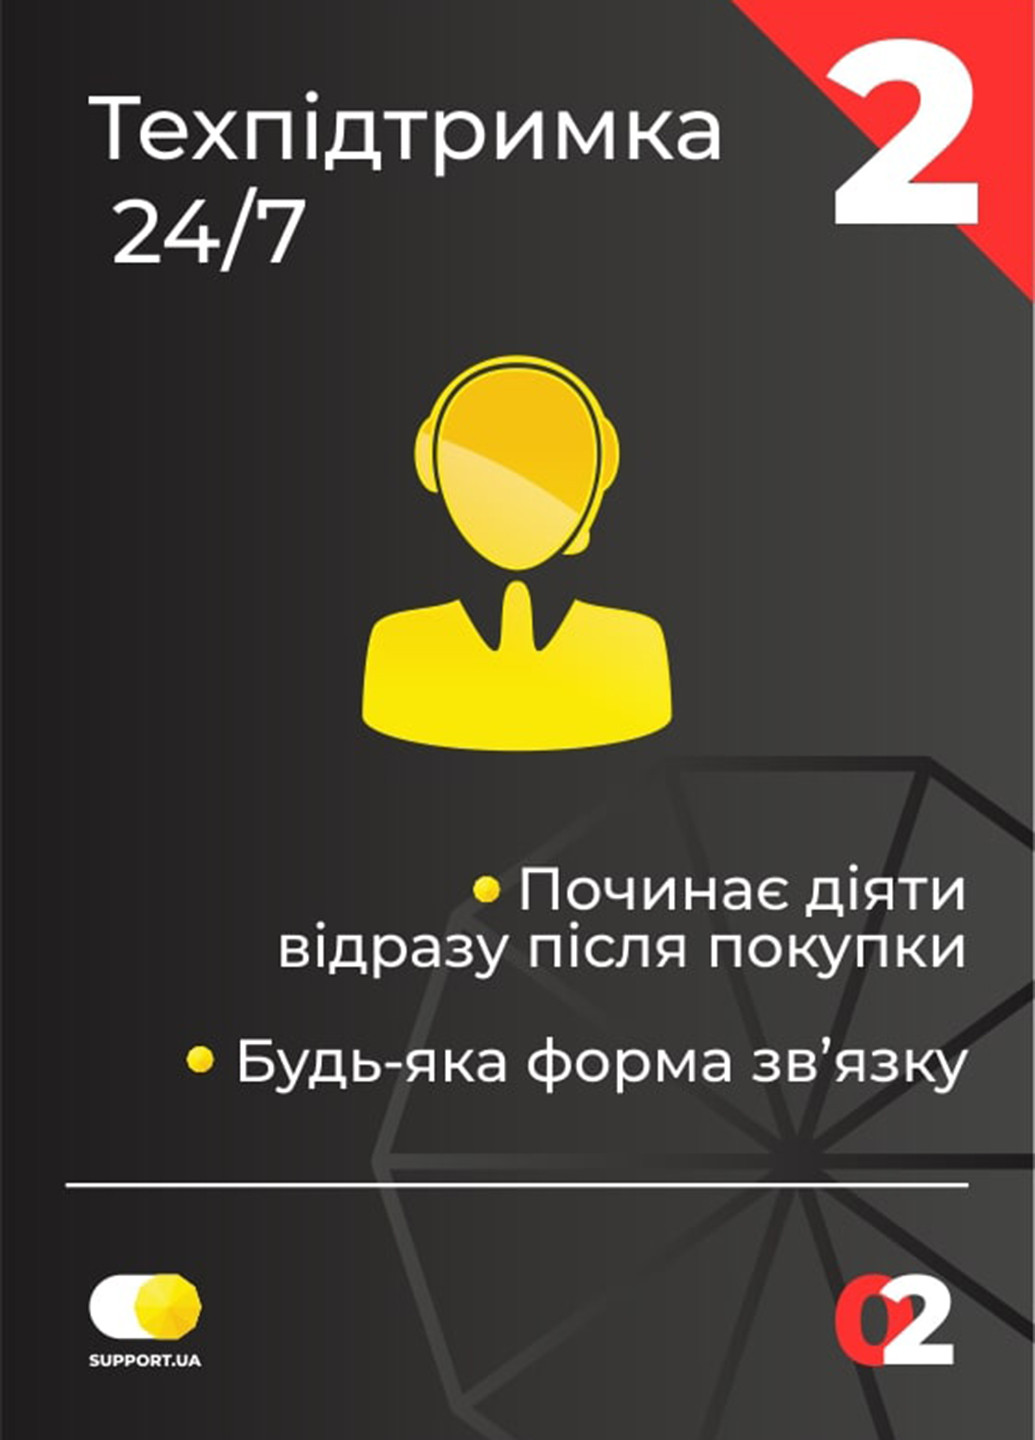 +1 год гарантии (2001-3000), Электронный сертификат от Support.ua